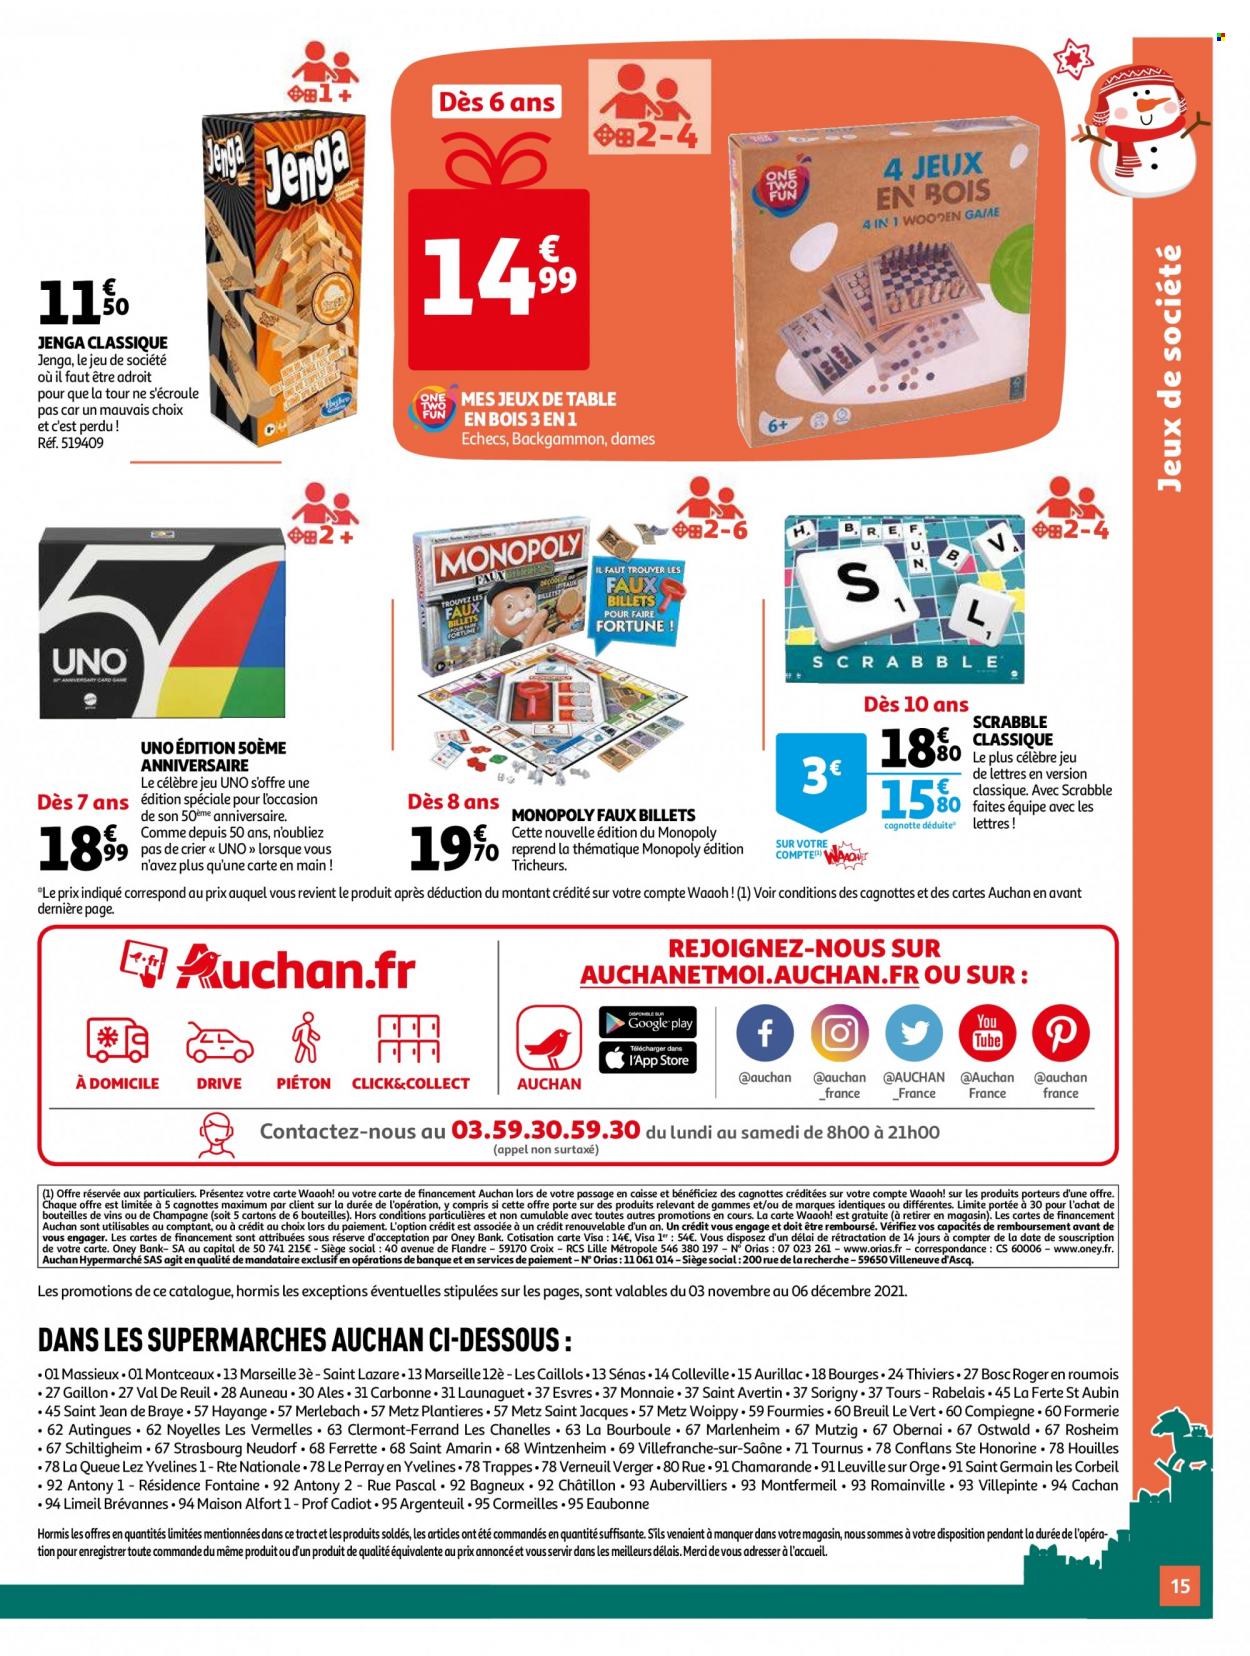 Catalogue Auchan - 03.11.2021 - 06.12.2021. 